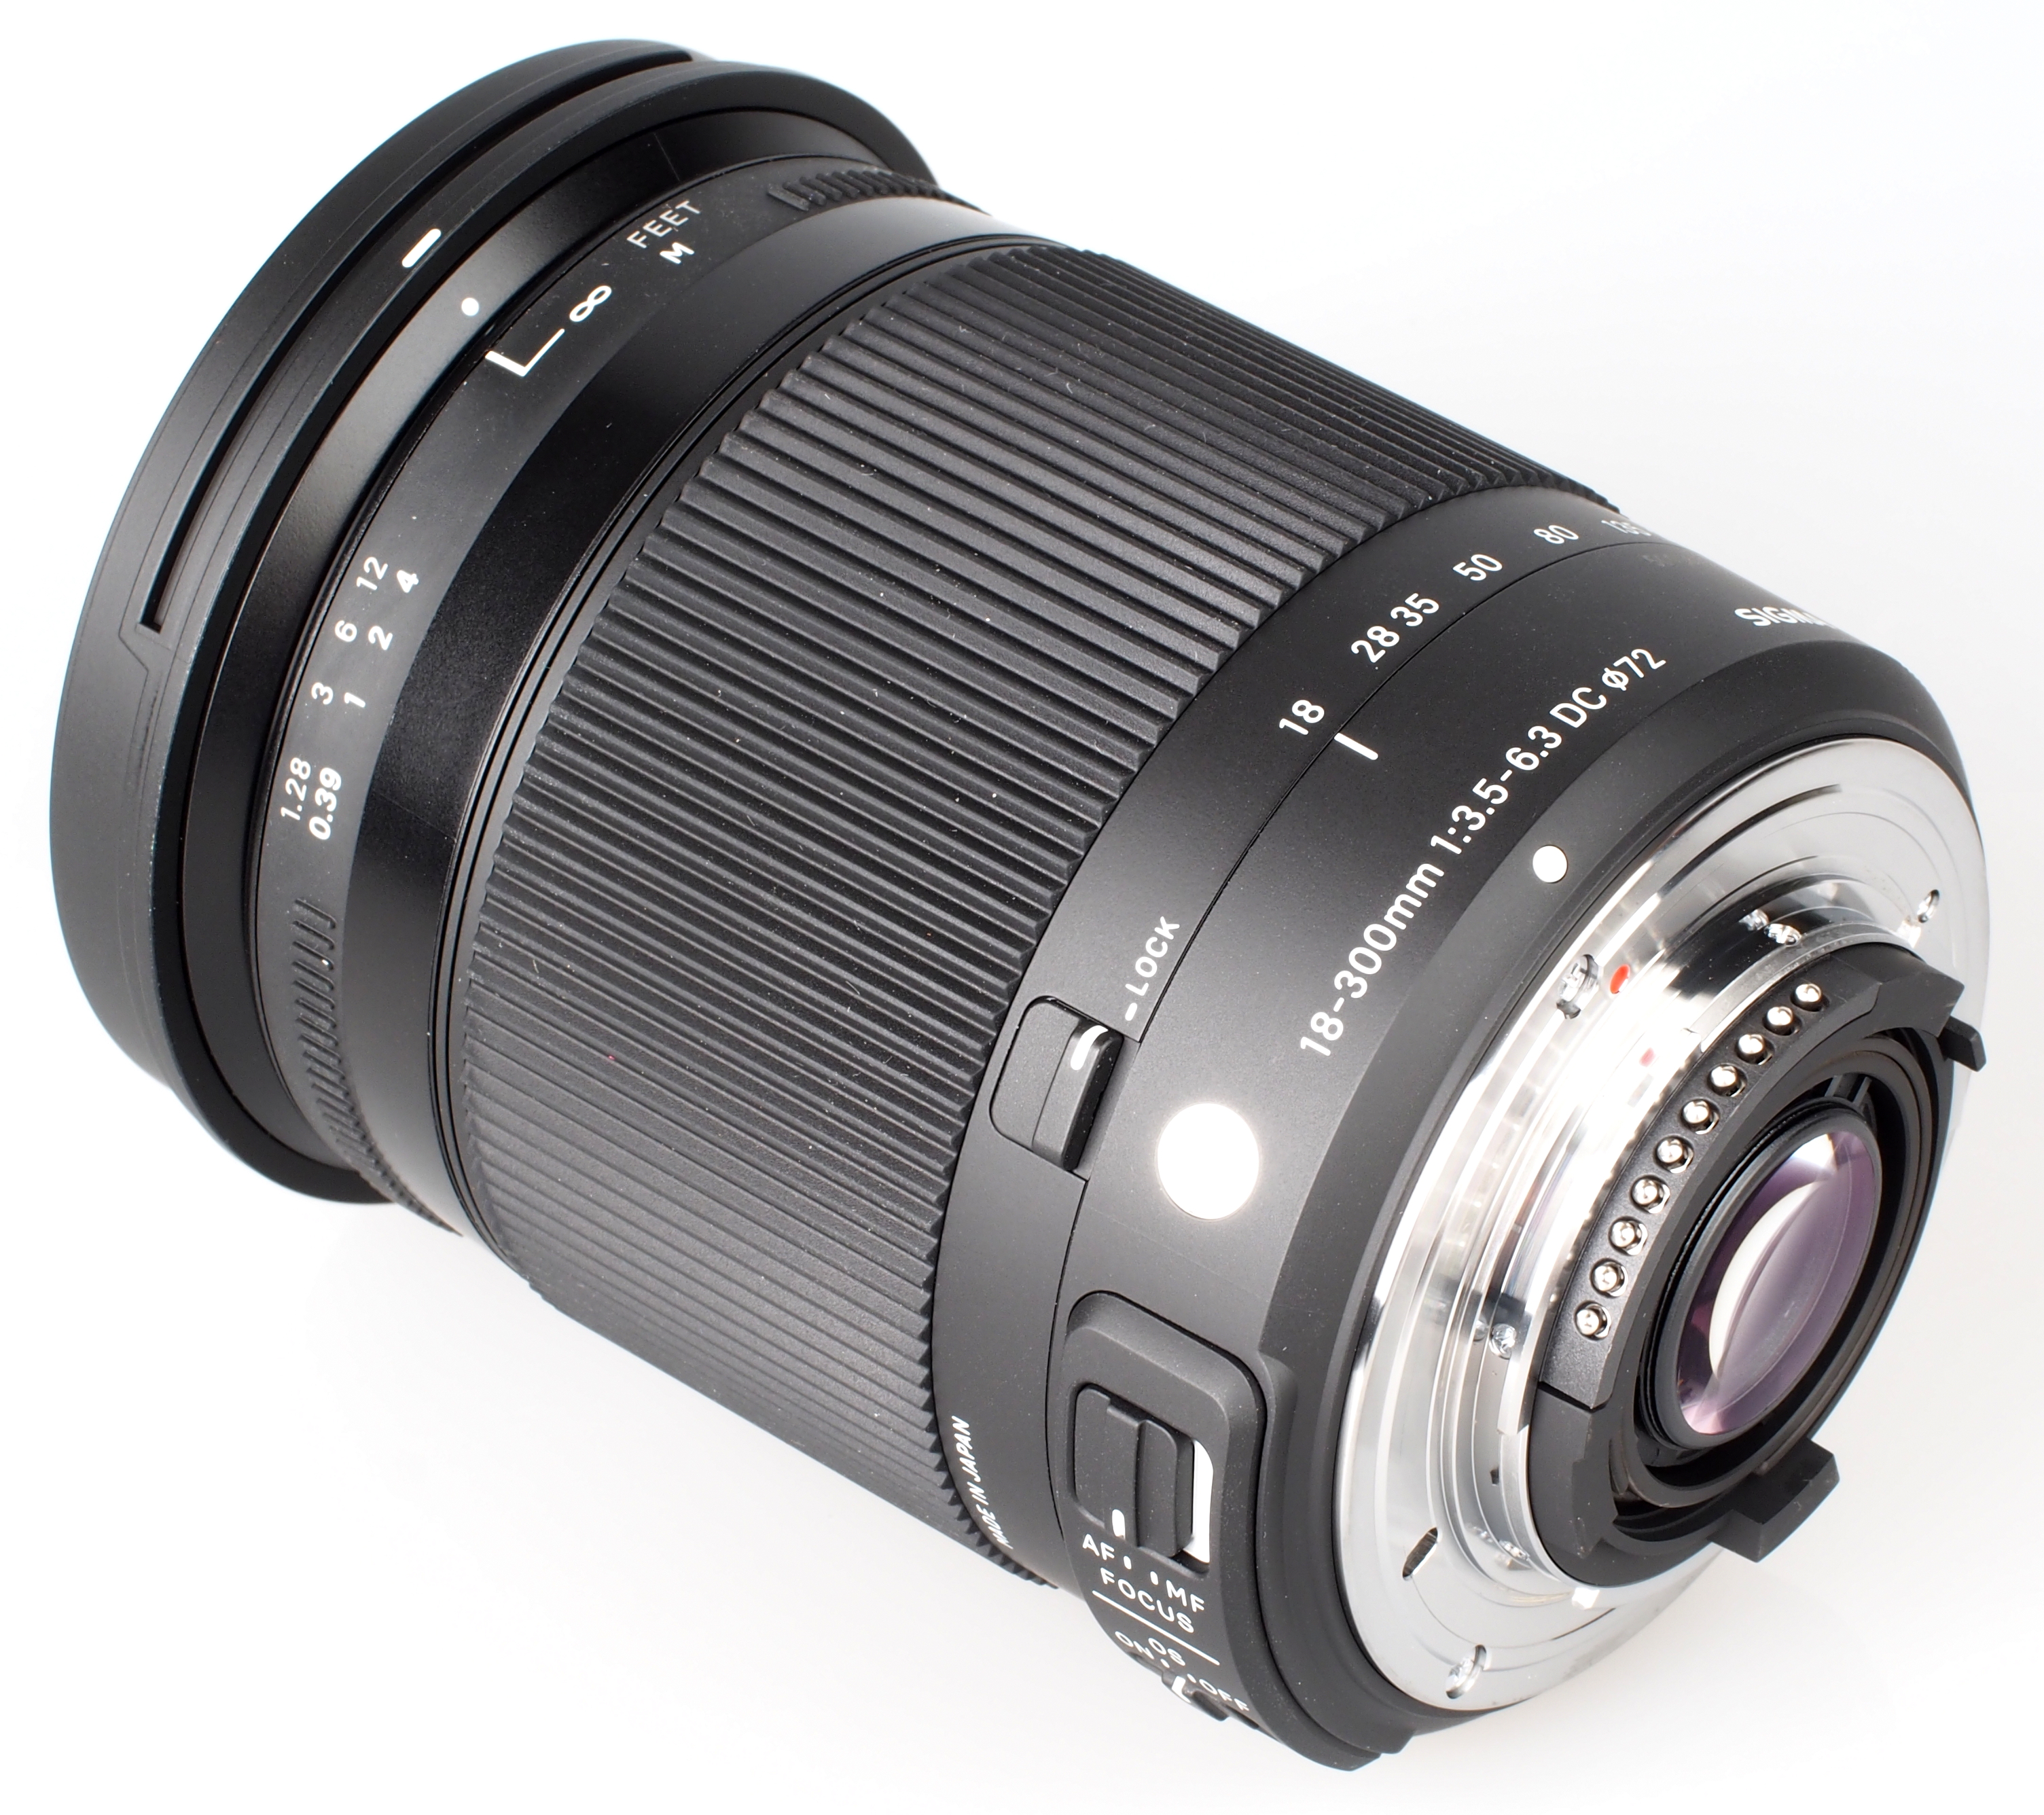 Sigma 18-300mm f/3.5-6.3 Macro OS HSM C Lens Review